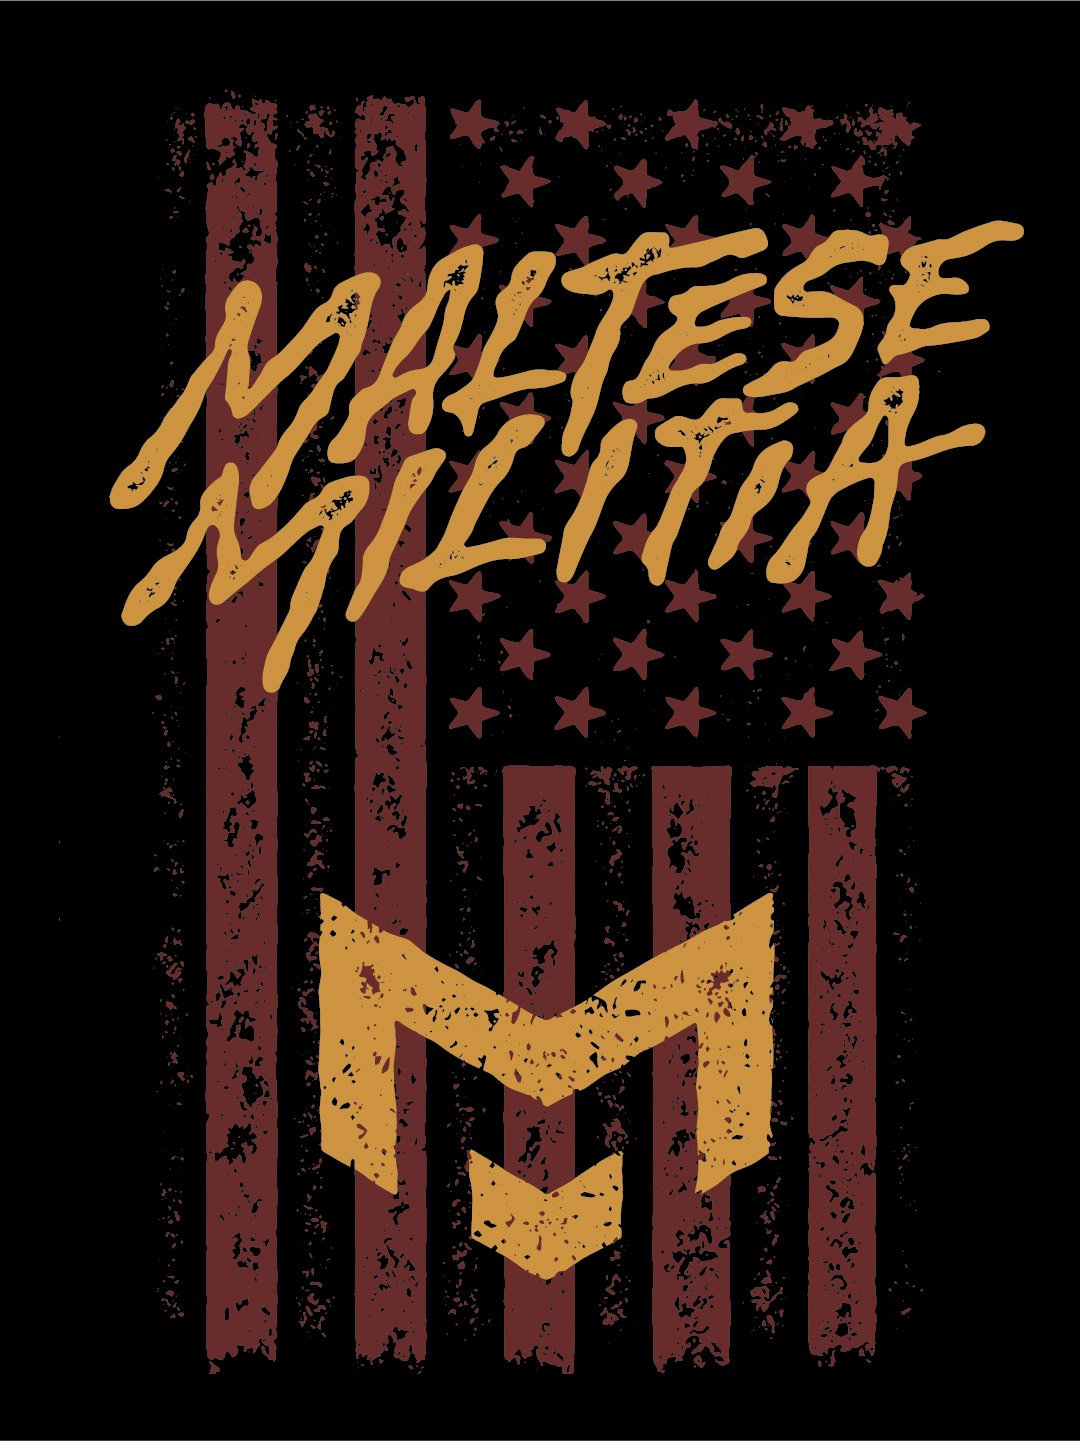 Maltese Militia shirt design by Jeff Finley